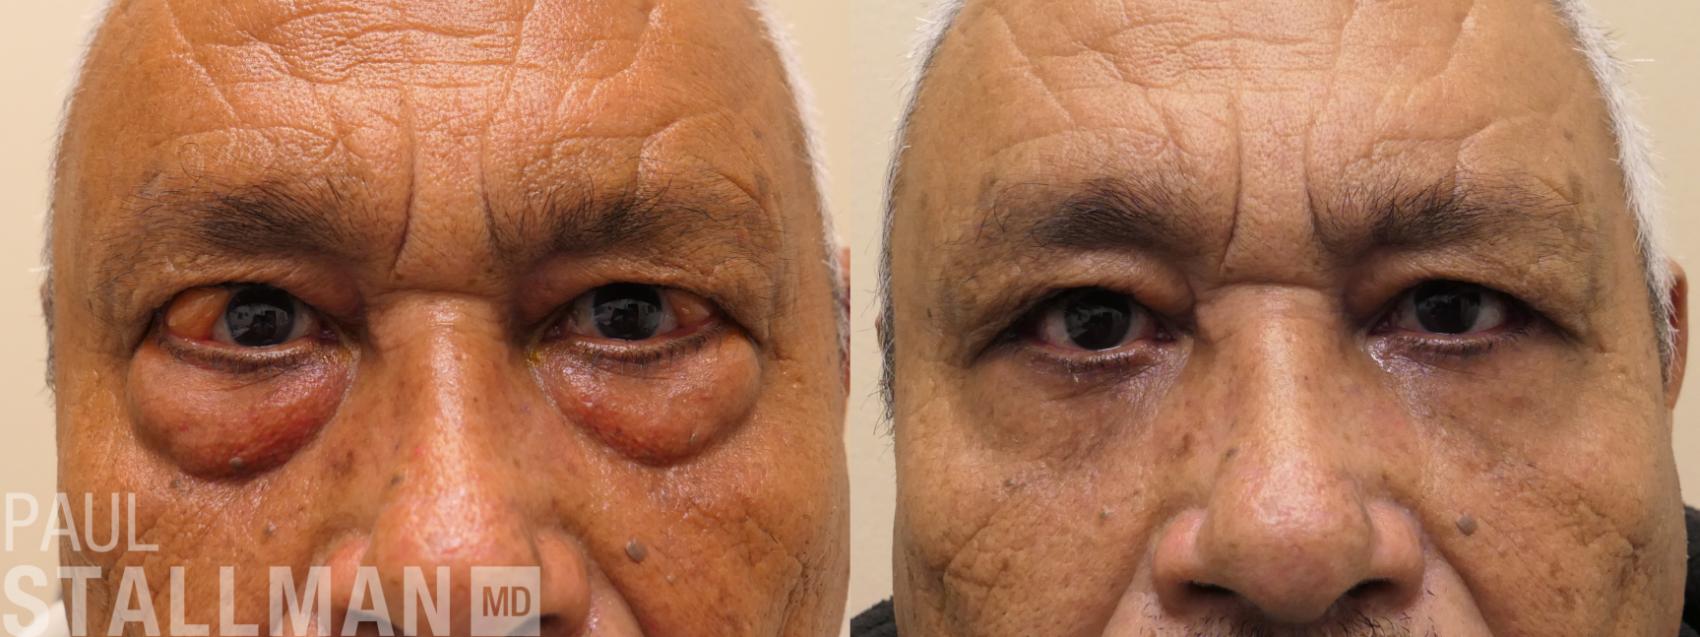 Before & After Blepharoplasty for Men Case 181 Front View in Fresno, Santa Maria, San Luis Obispo, CA